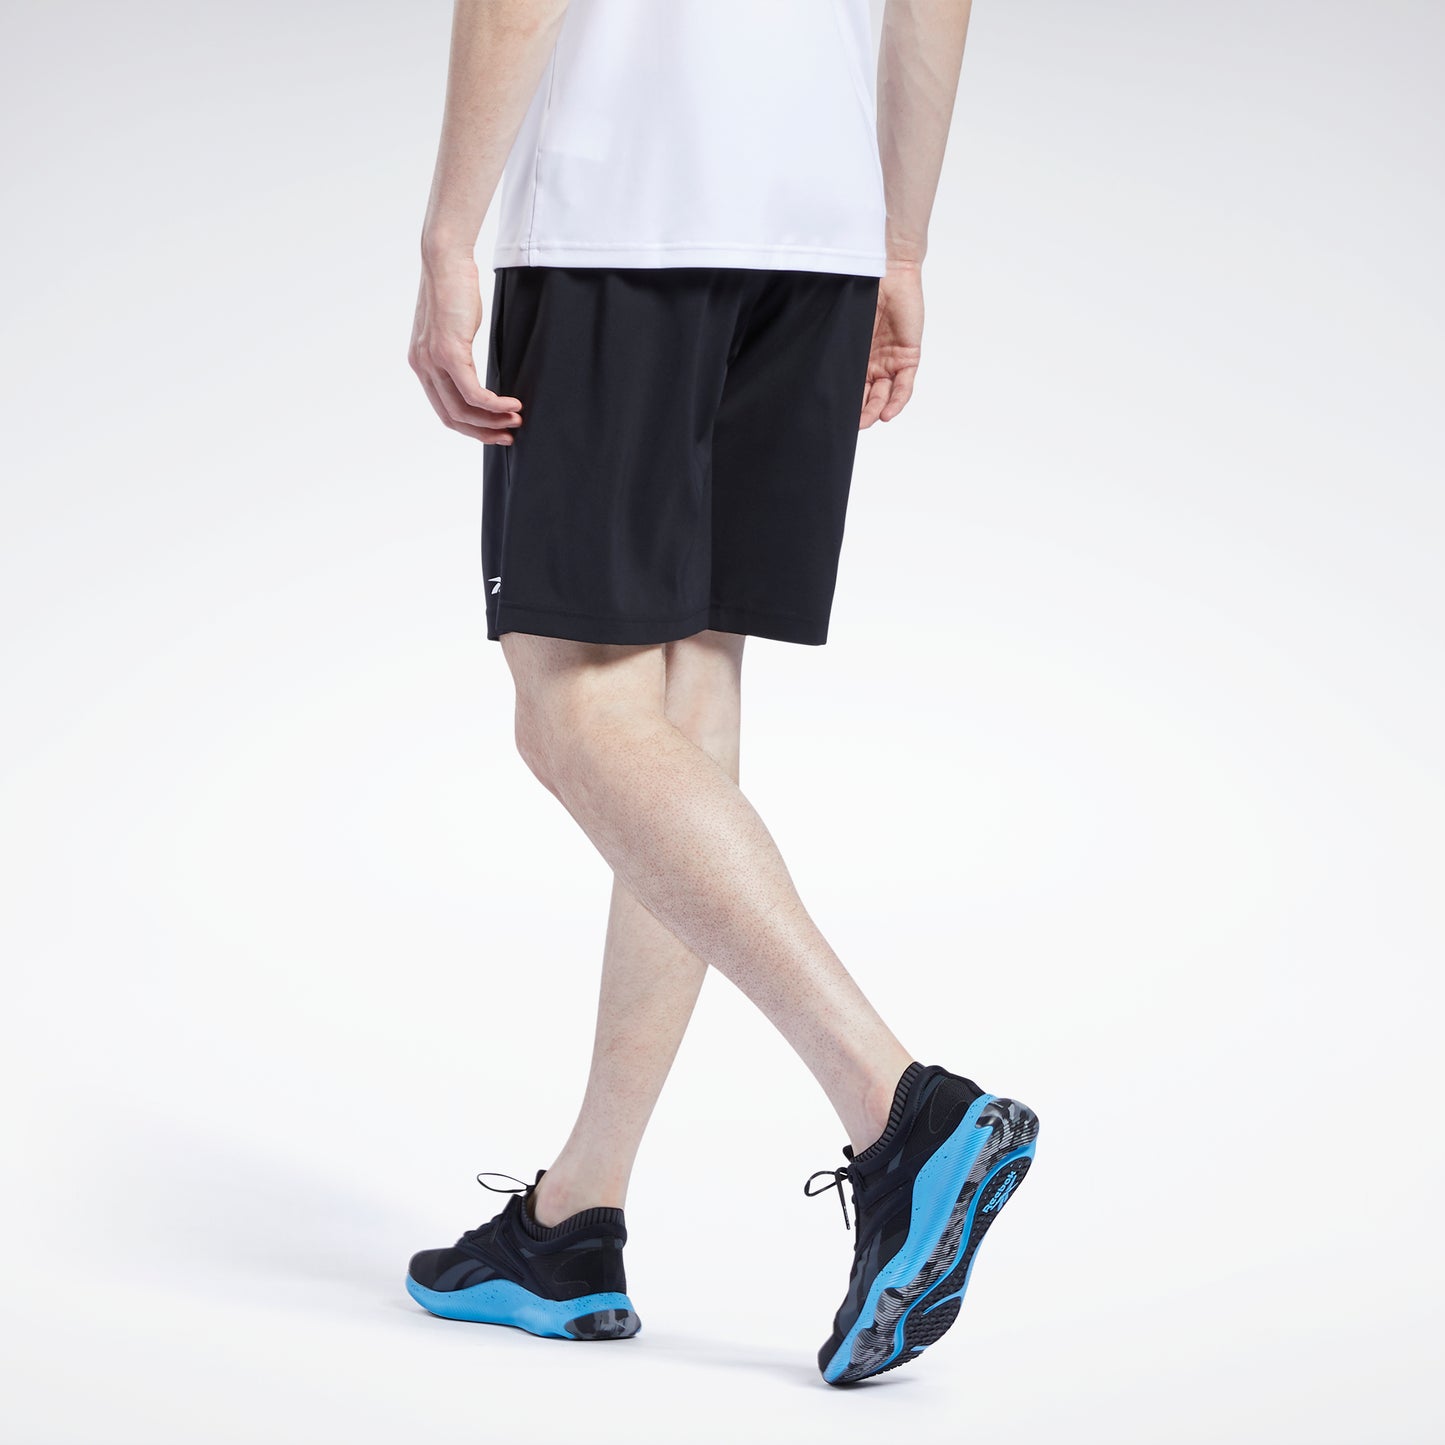  Reebok Men's Standard Workout Ready Woven Shorts, Light  Grey/Drawstring, Small : Clothing, Shoes & Jewelry